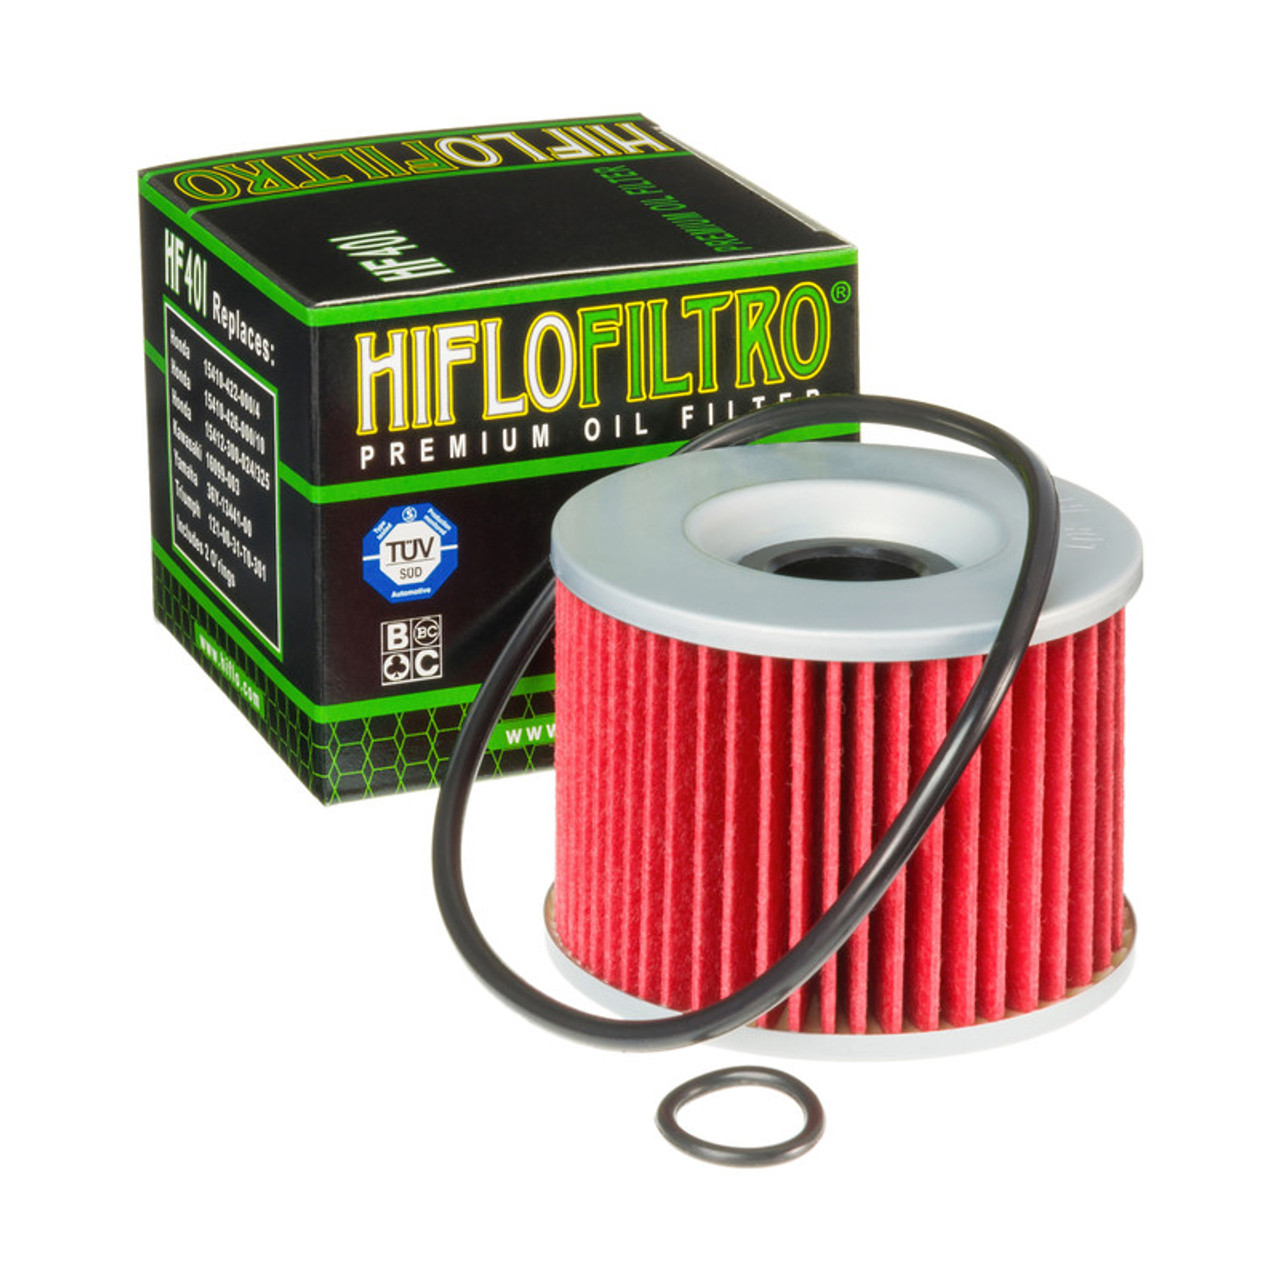 Hi-Flo HF401 Oil Filter